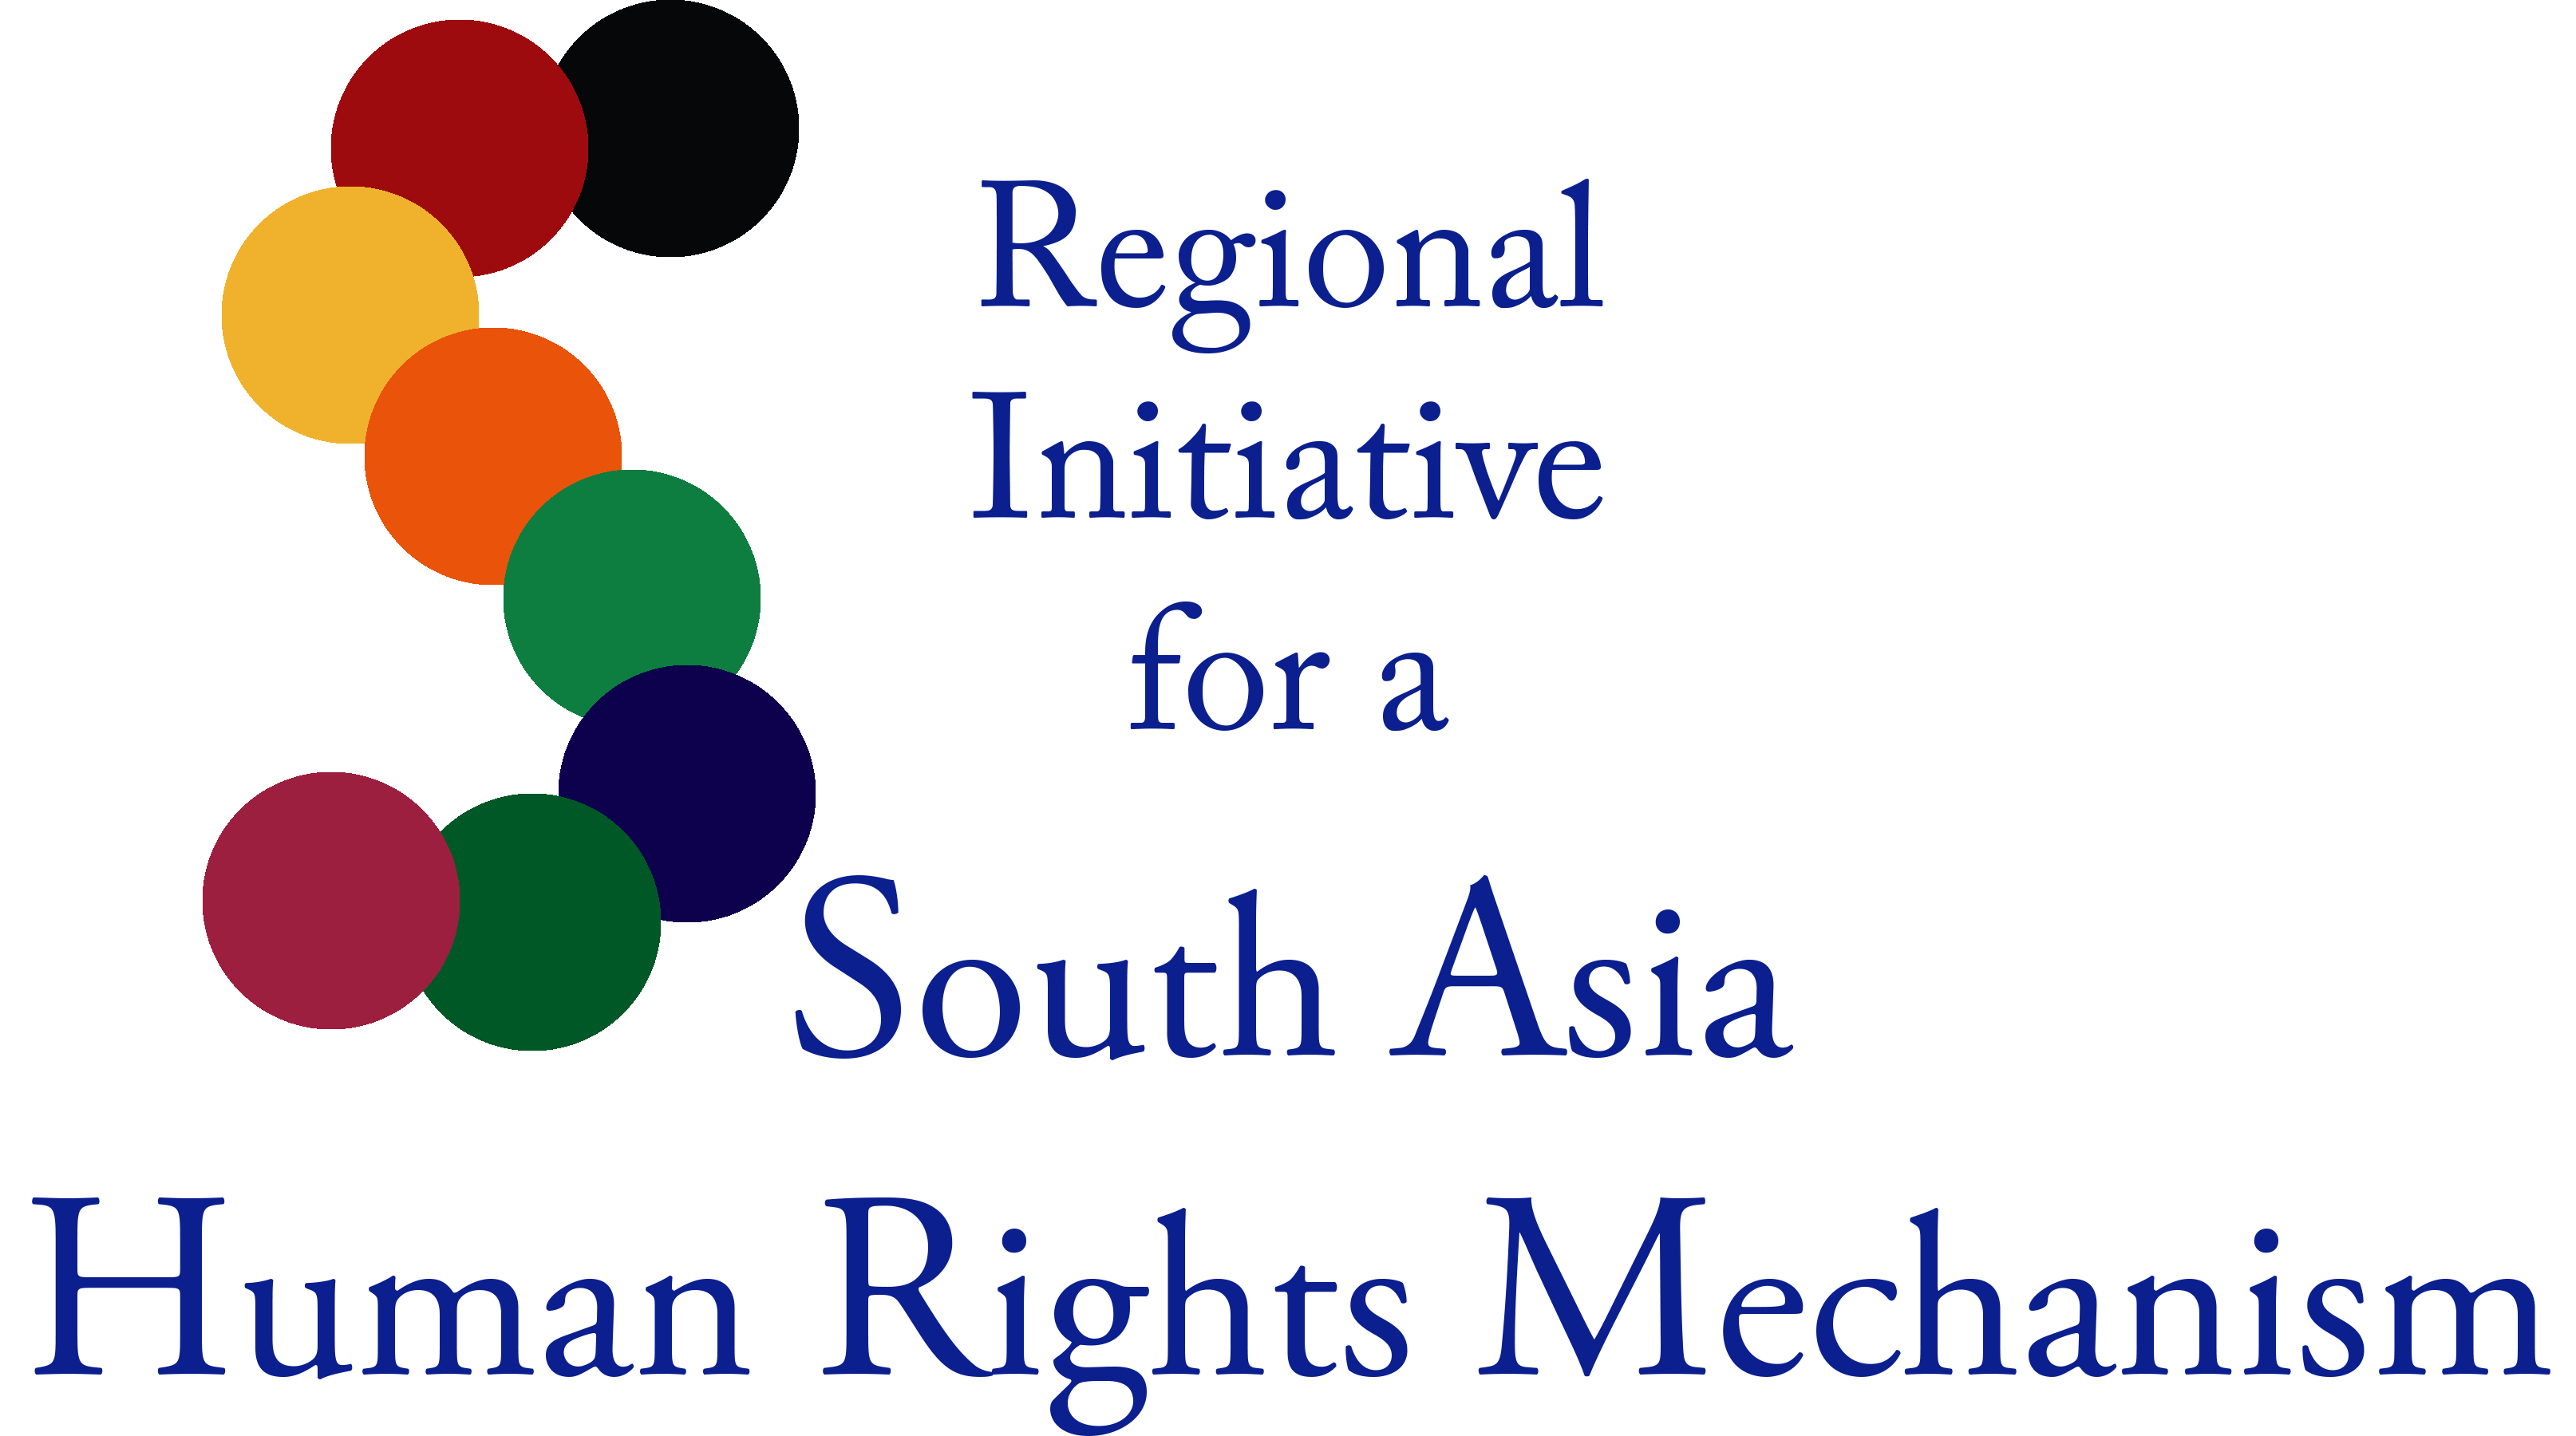 Regional Initiative - SA HR Mechanism - Logo (ICP)